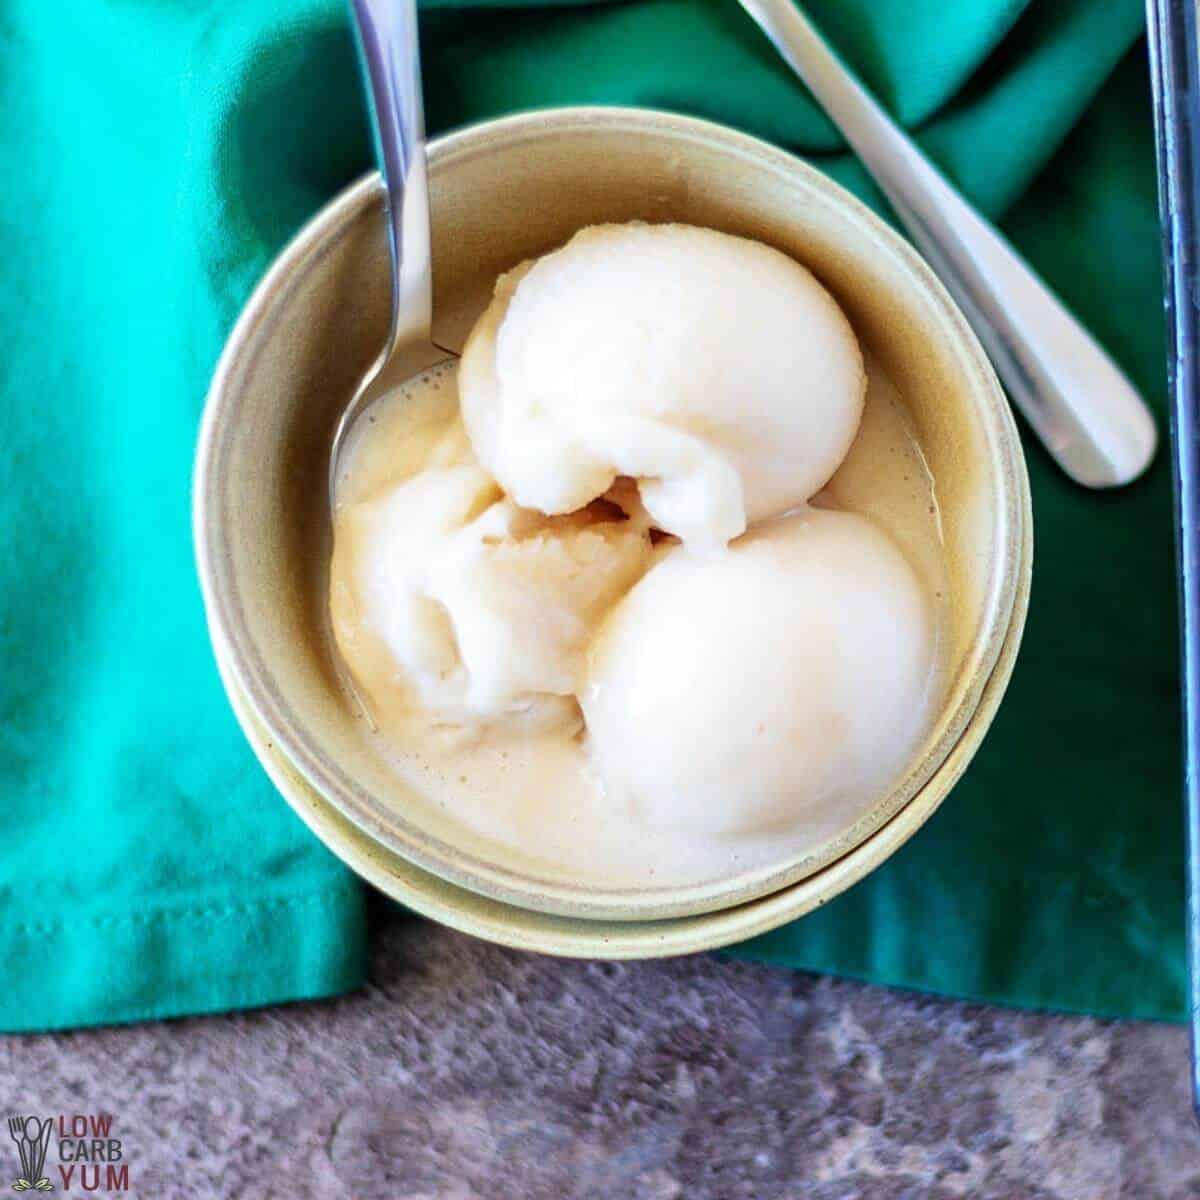 Friendly's Rich and Creamy Homemade Vanilla Ice Cream Tub - 1.5 Quart